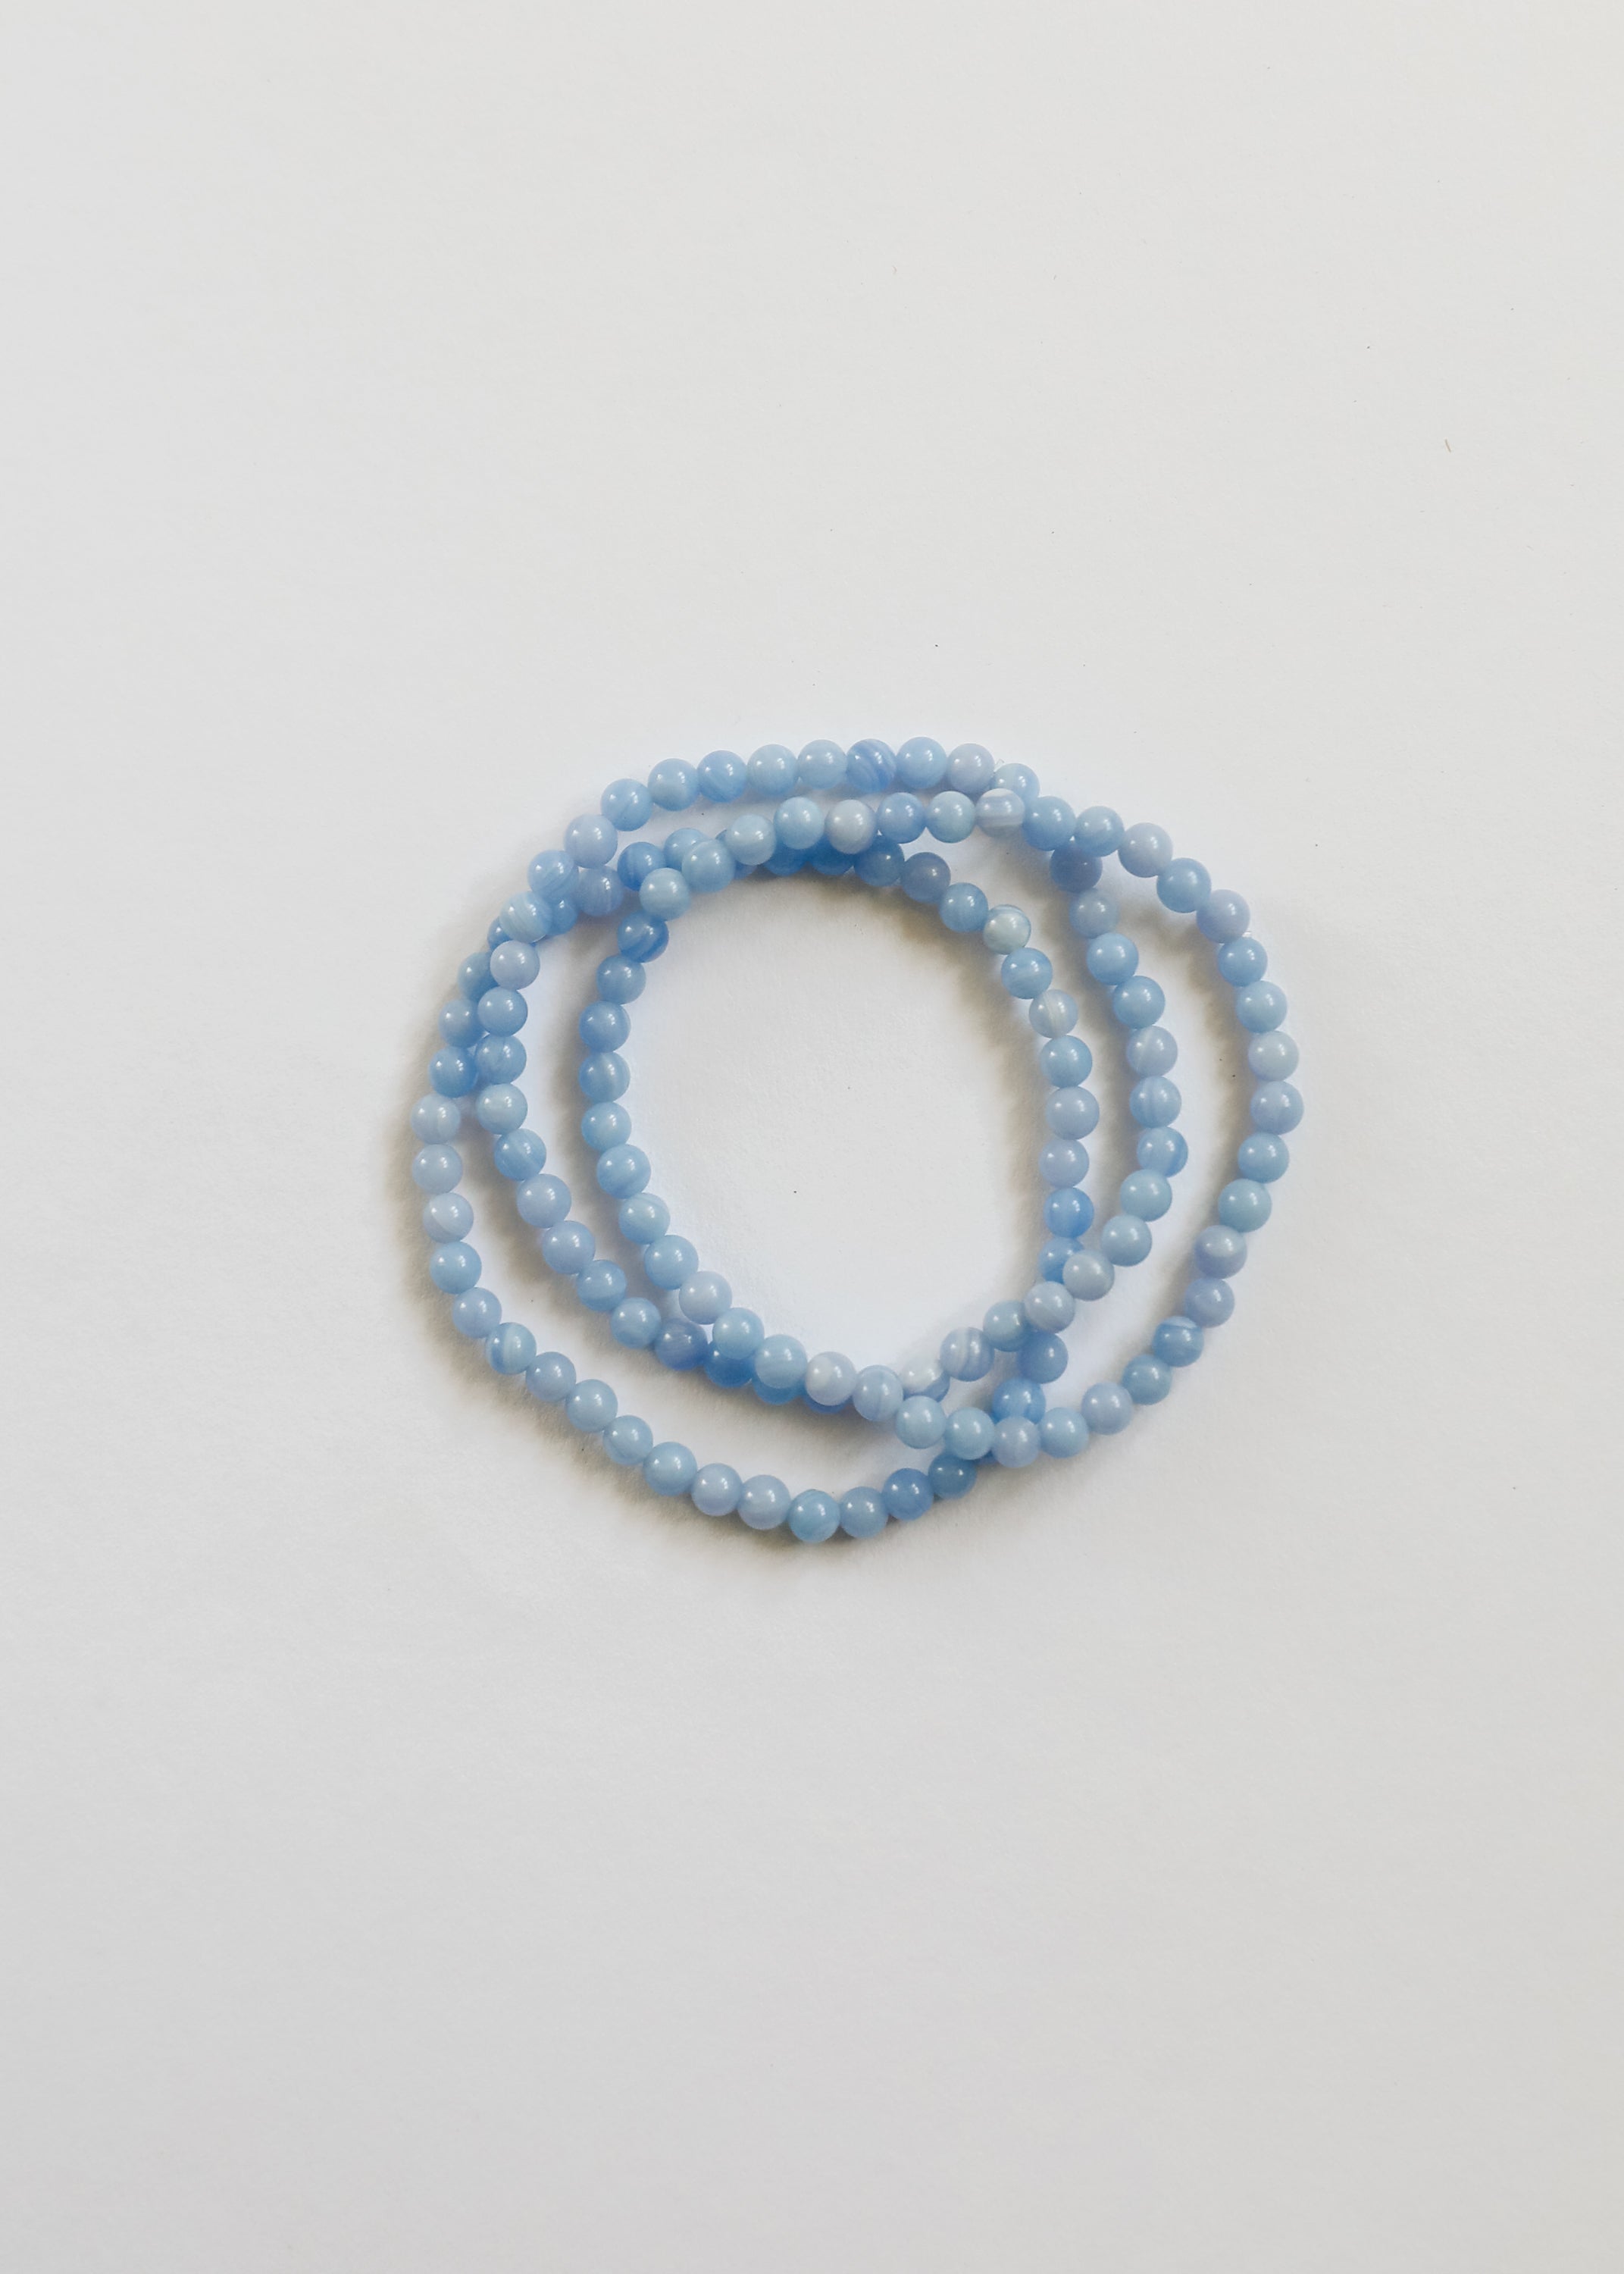 Polished Blue Lace Agate || Adult Bracelet